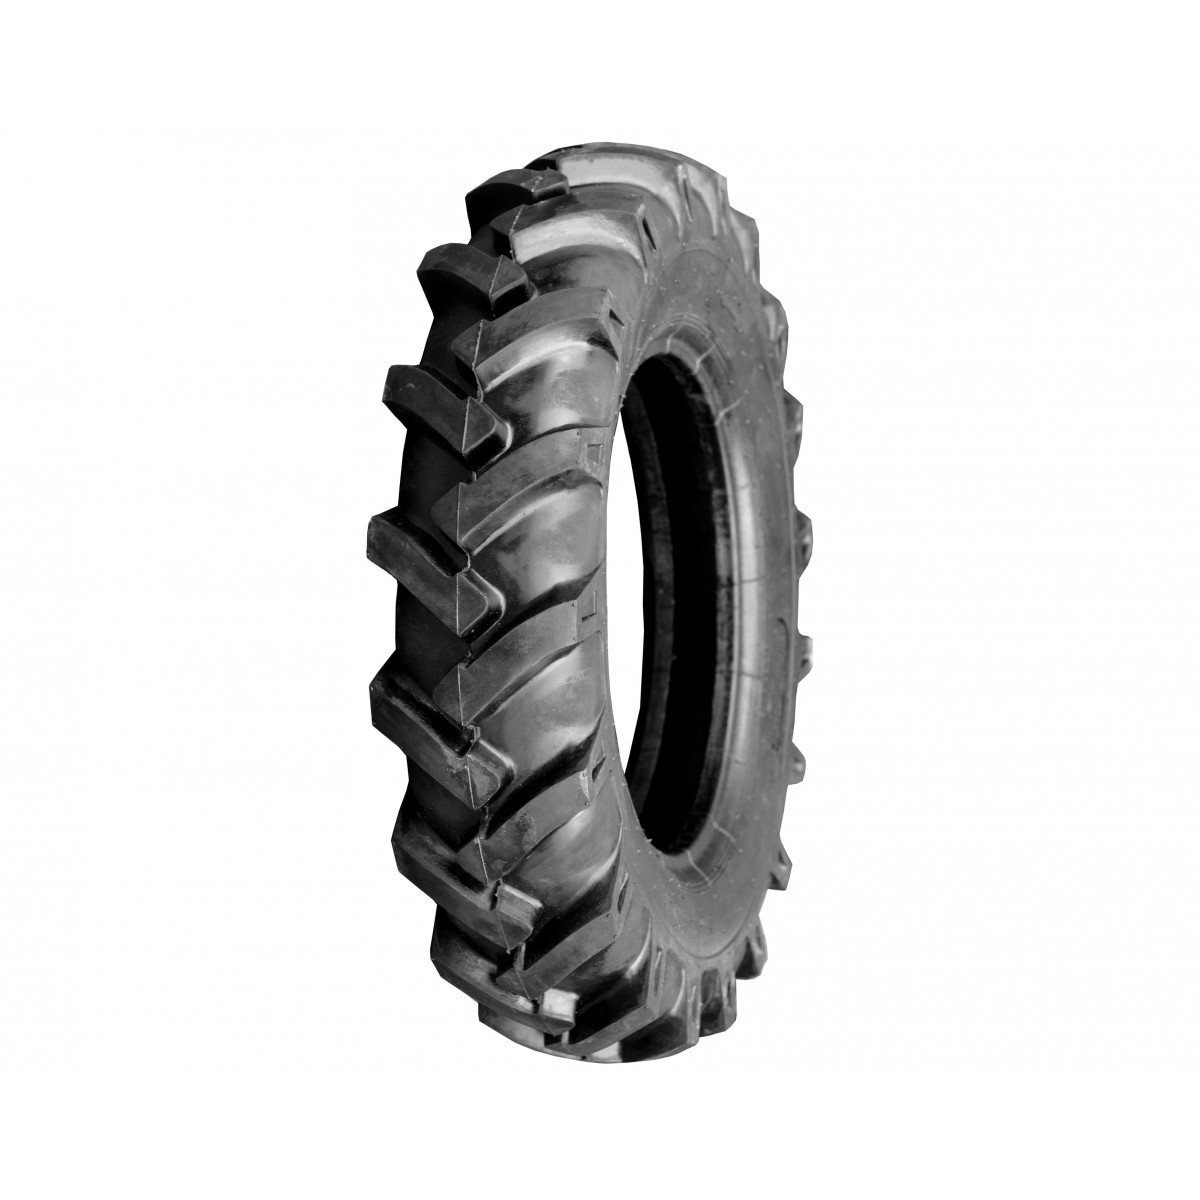 Agricultural tire 8.00-18 8PR 8-18 8x18 FIR R1